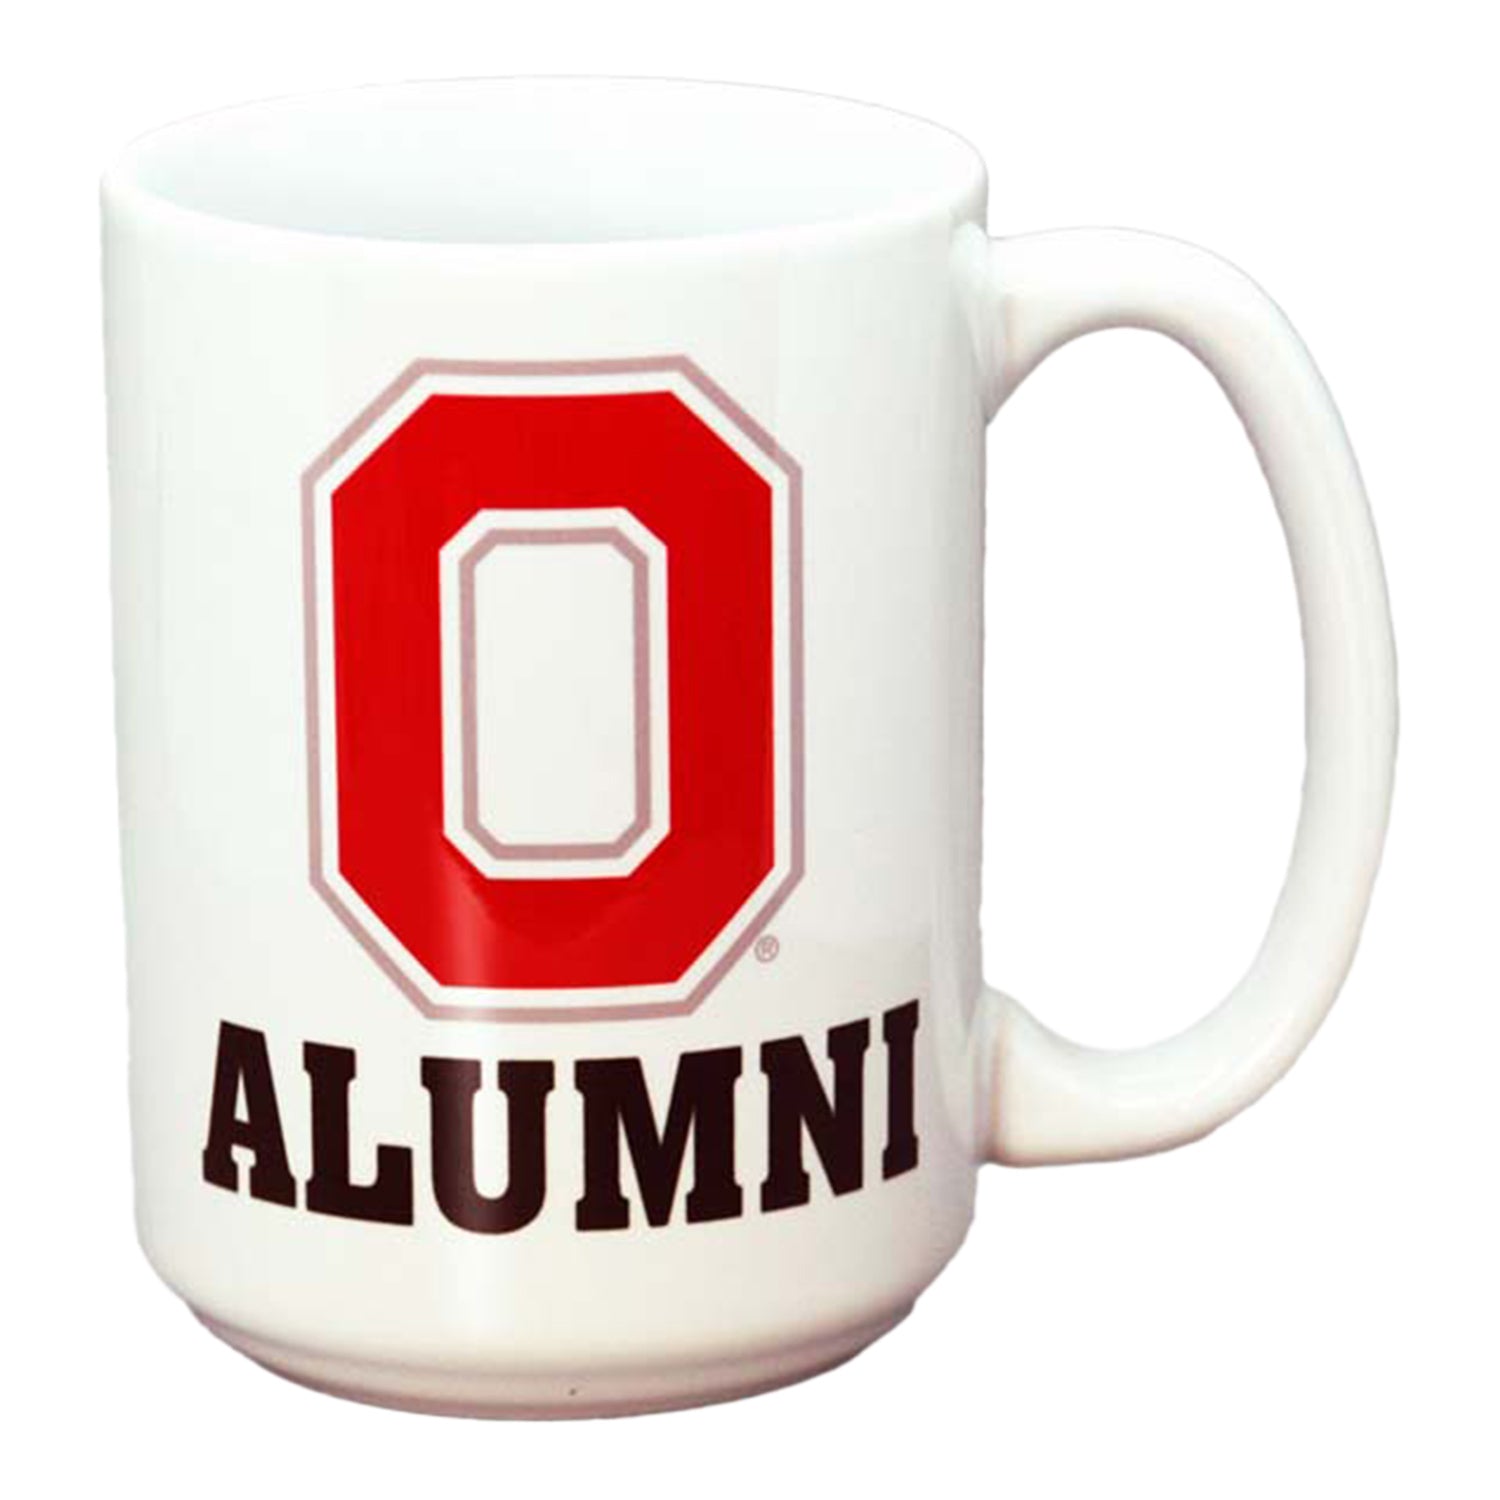 Ohio State Mug 